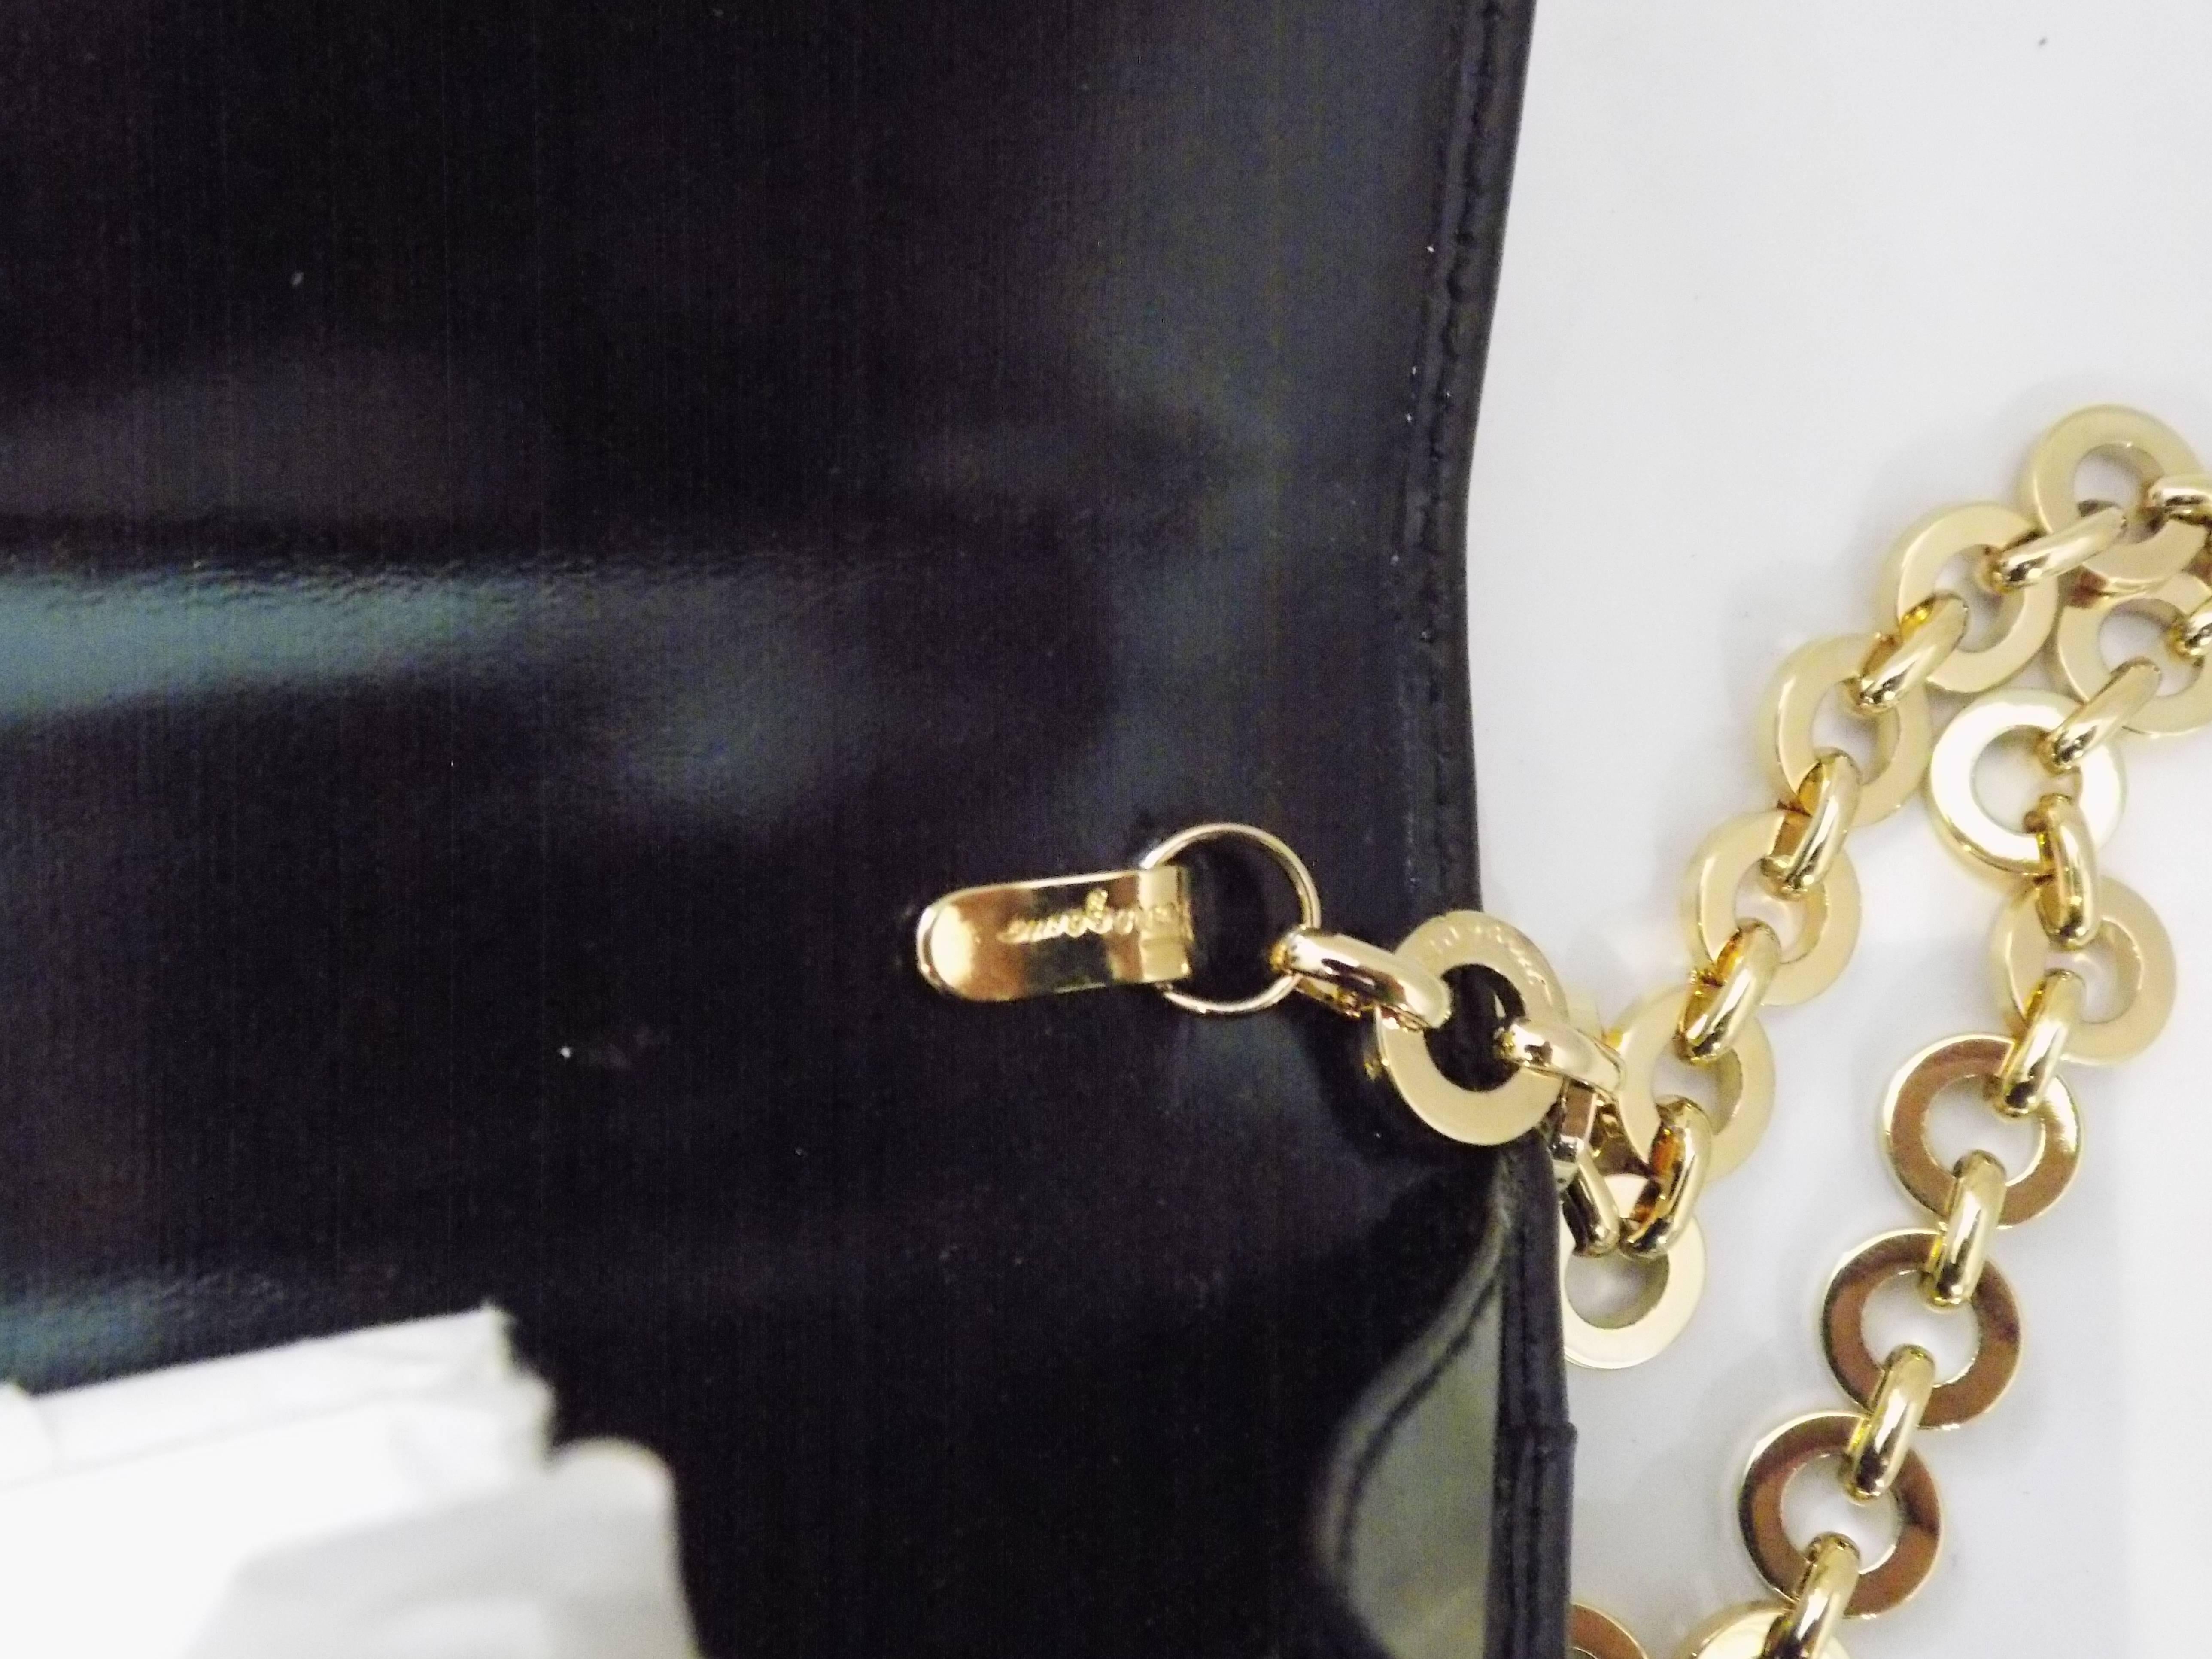  Salvatore Ferragamo black polished clutch / shoulder bag w gold chain 2